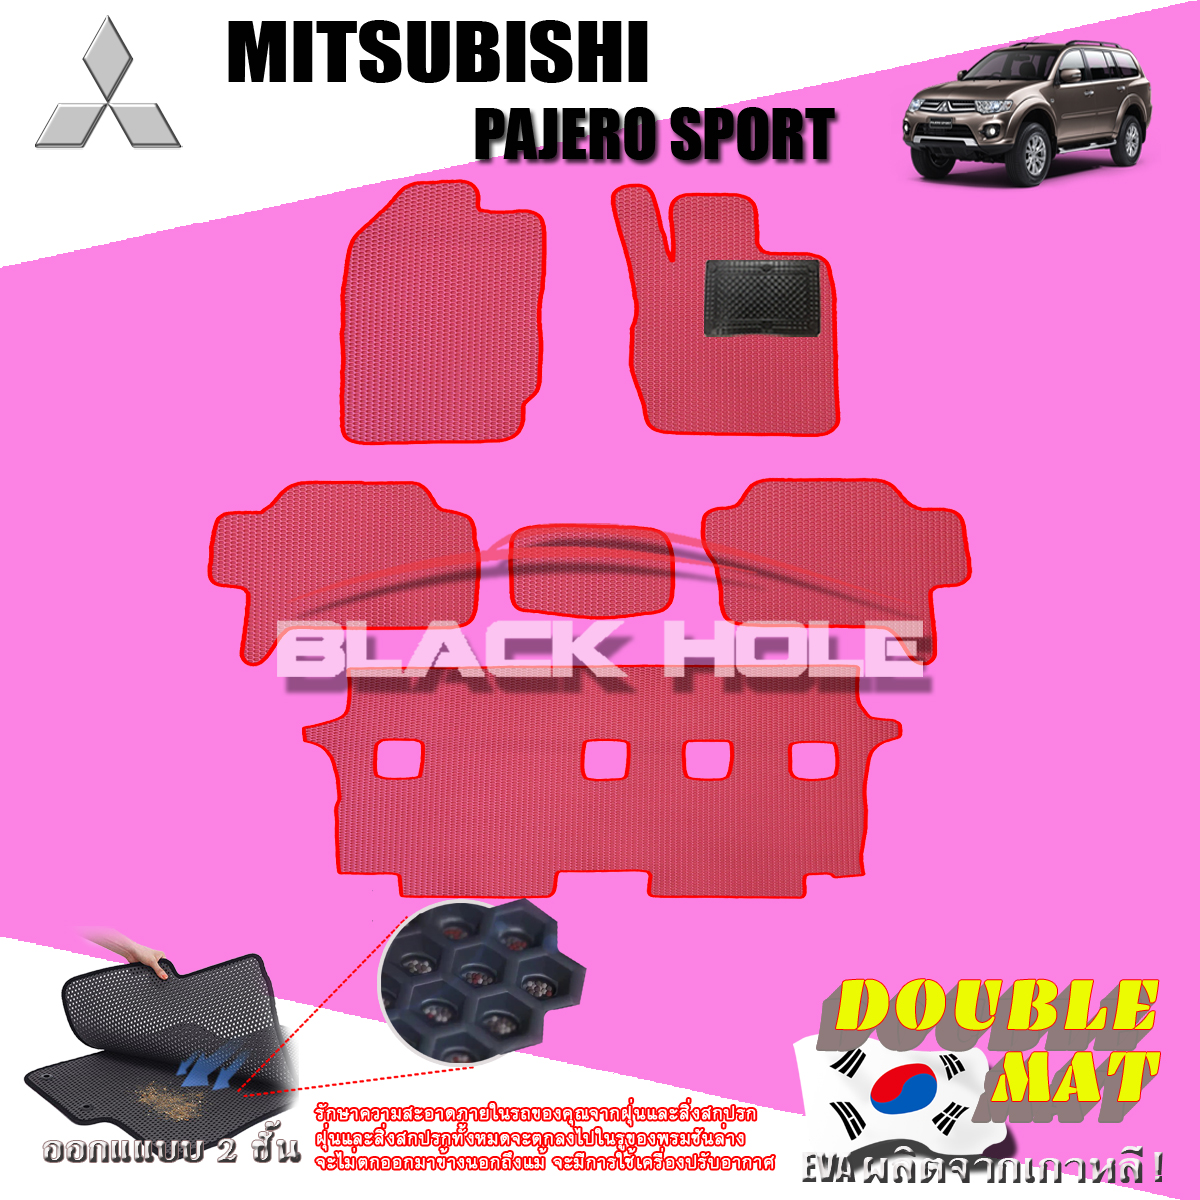 Mitsubishi Pajero Sport ปี 2008 - ปี 2014 พรมรถยนต์Pajero พรมเข้ารูปสองชั้นแบบรูรังผึ้ง Blackhole Double Mat (ชุดห้องโดยสาร) สี SET B ( 6 Pcs. )  Red-สีแดงขอบเดิม ( 6 ชิ้น ) สี SET B ( 6 Pcs. )  Red-สีแดงขอบเดิม ( 6 ชิ้น )